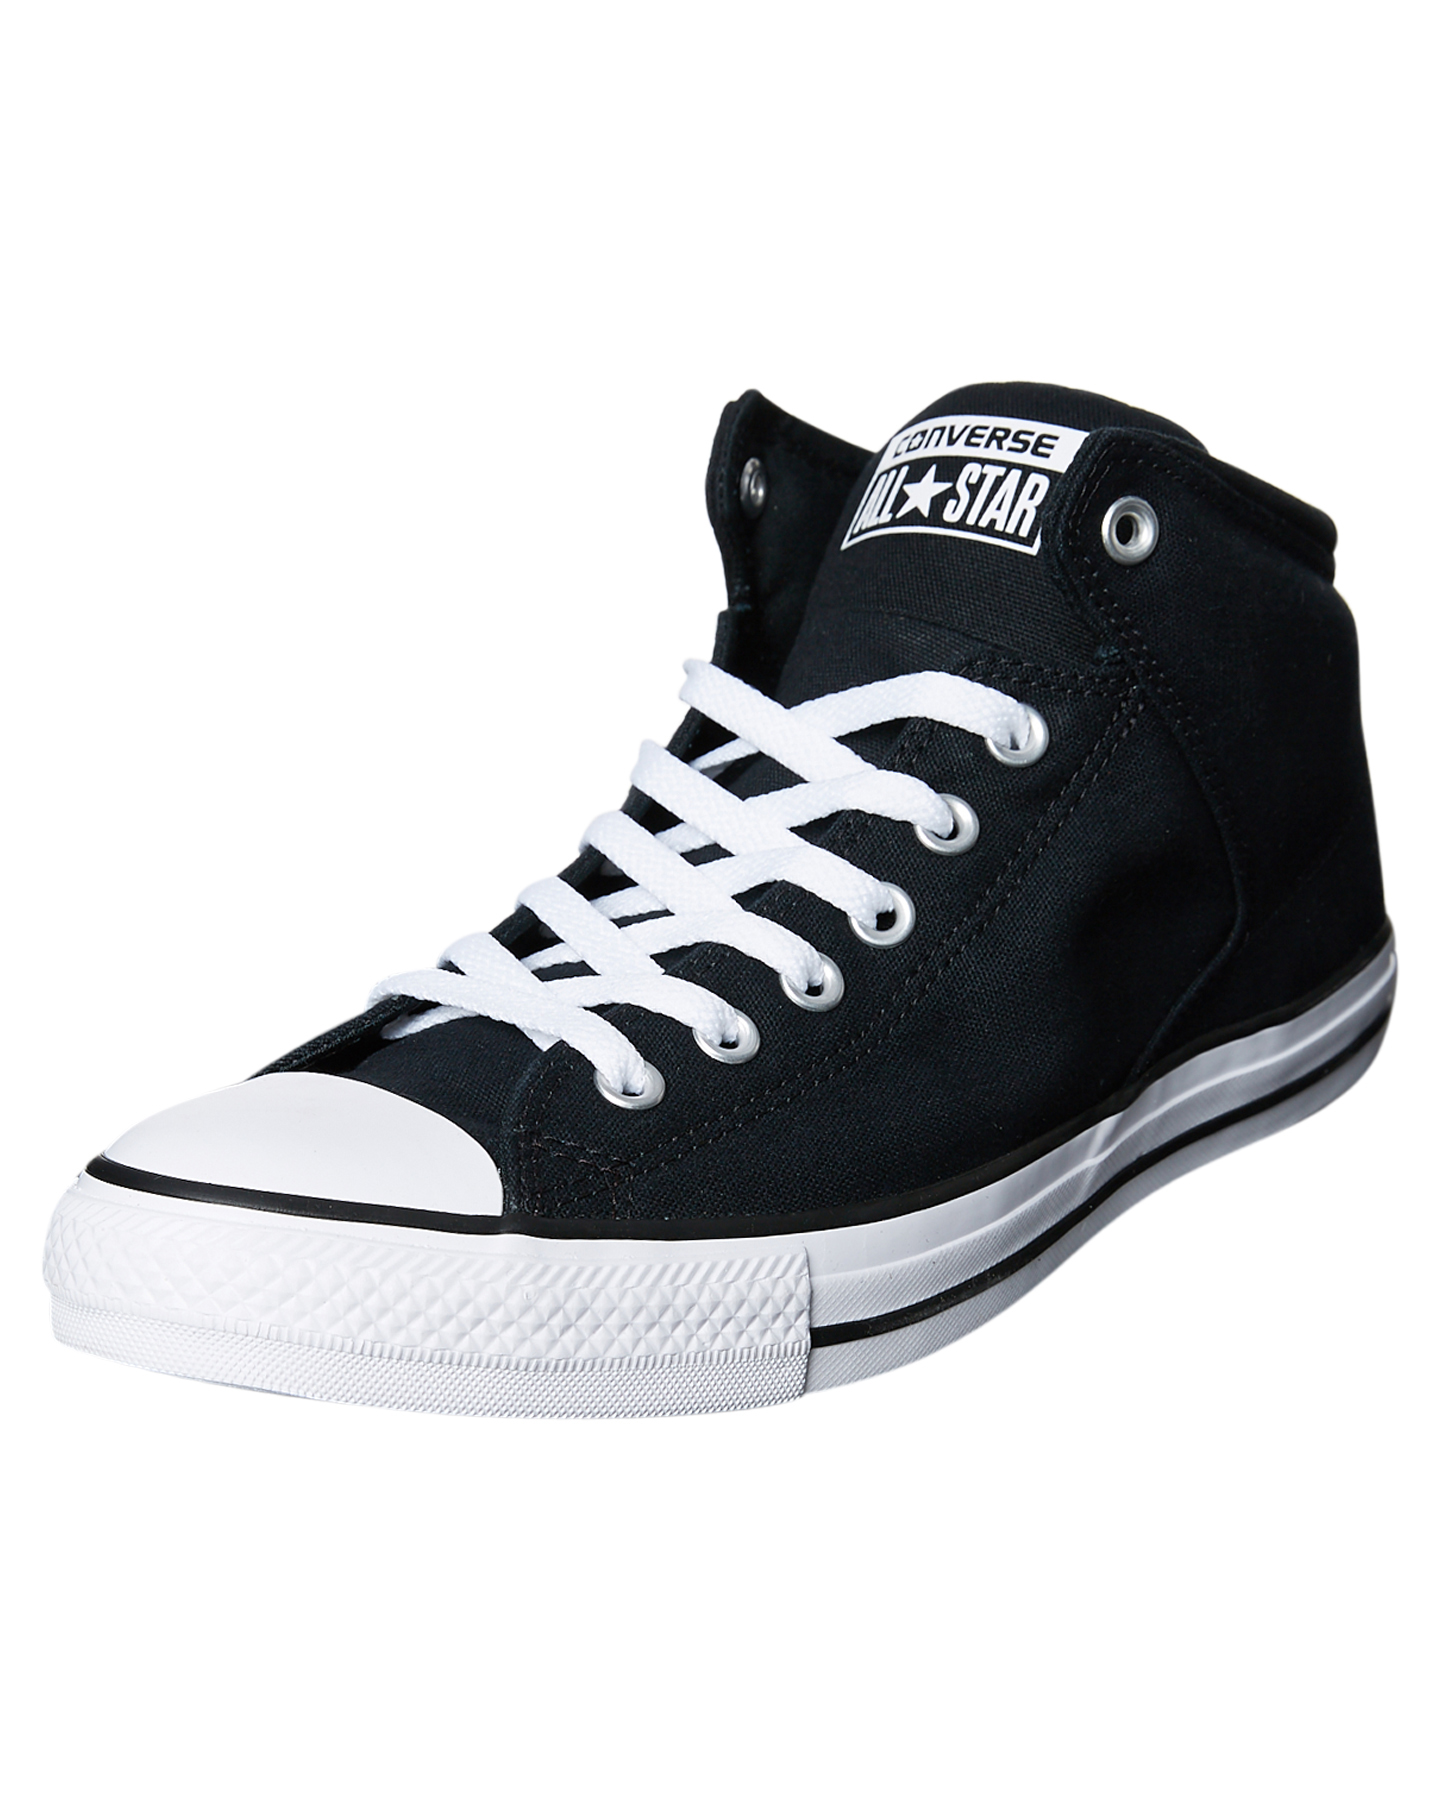 Converse Chuck Taylor All Star High Street High Top Shoe - Black White ...